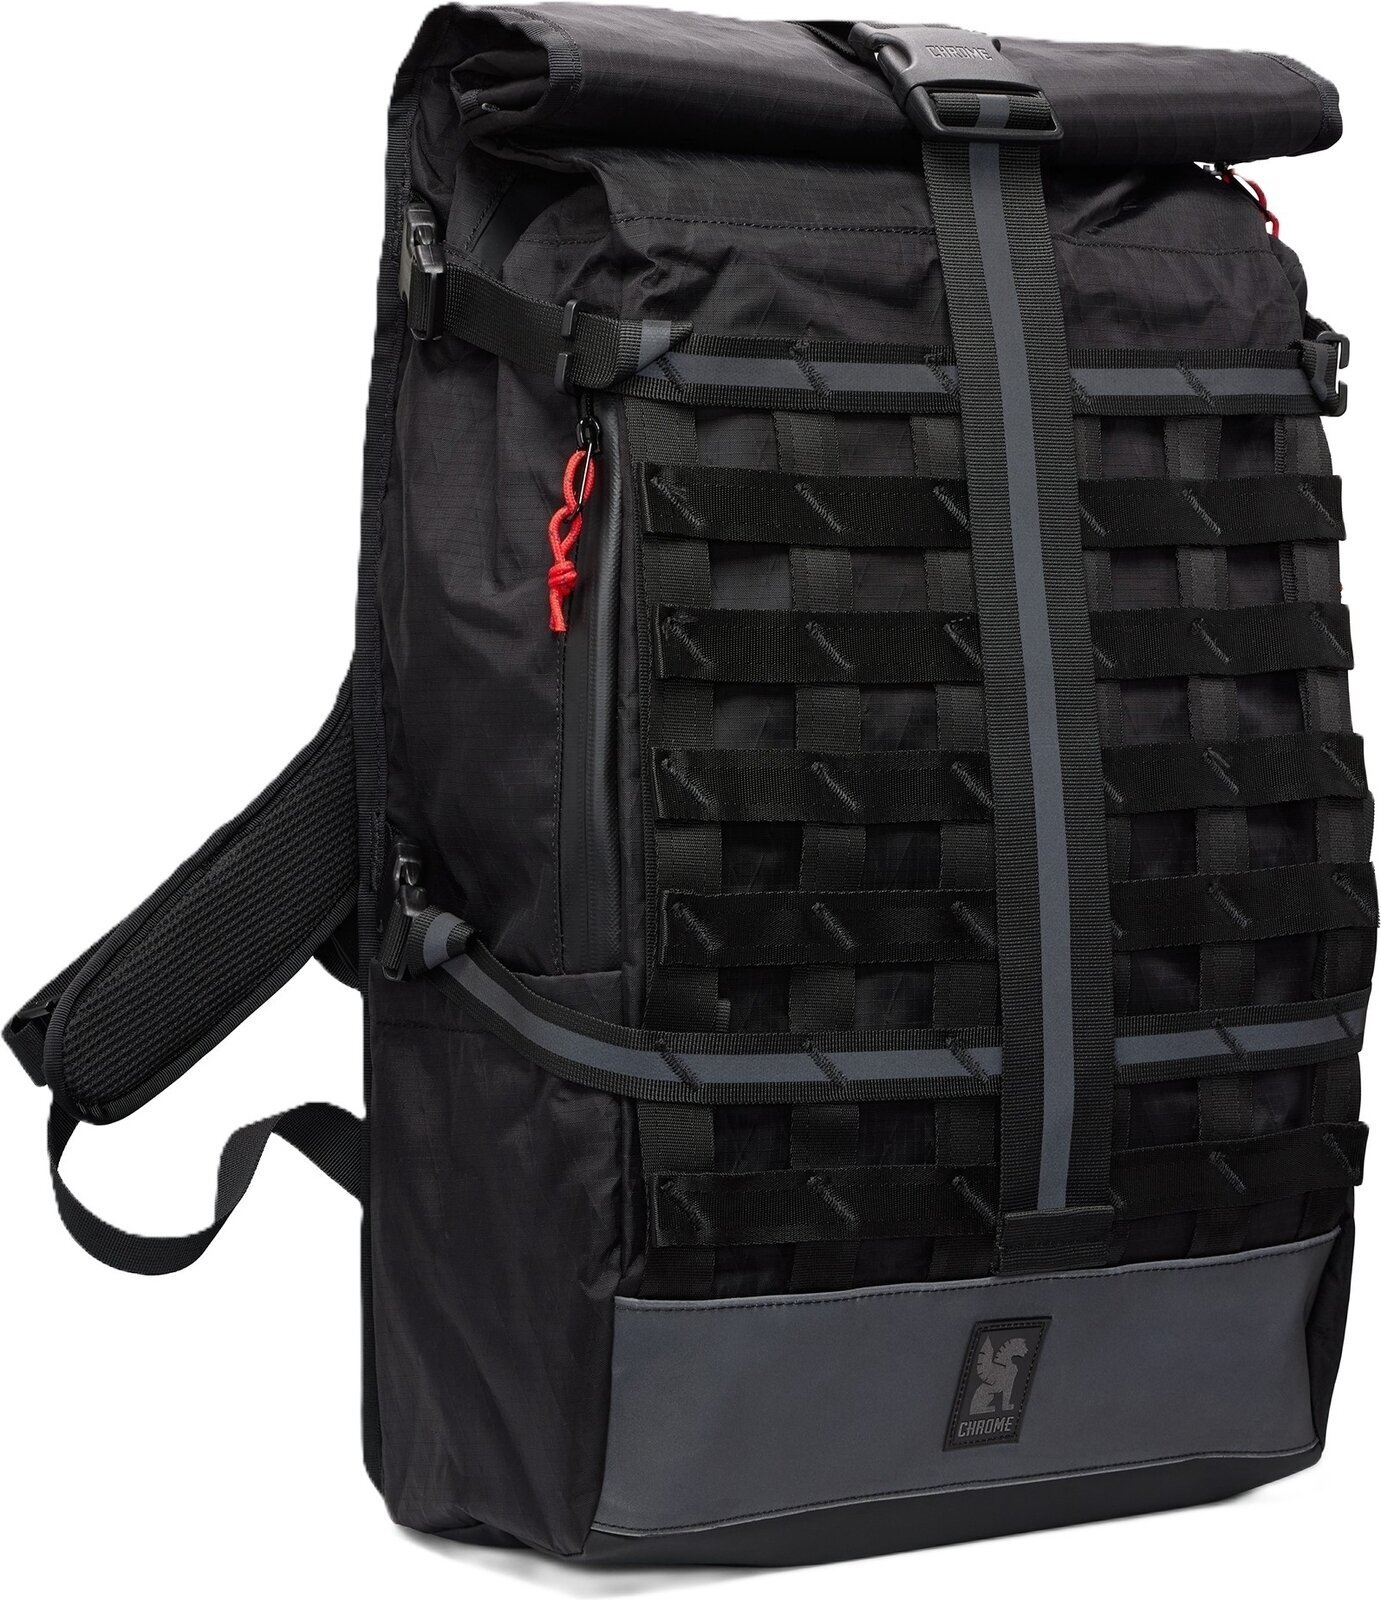 Lifestyle sac à dos / Sac Chrome Barrage Backpack Reflective Black 34 L Sac à dos